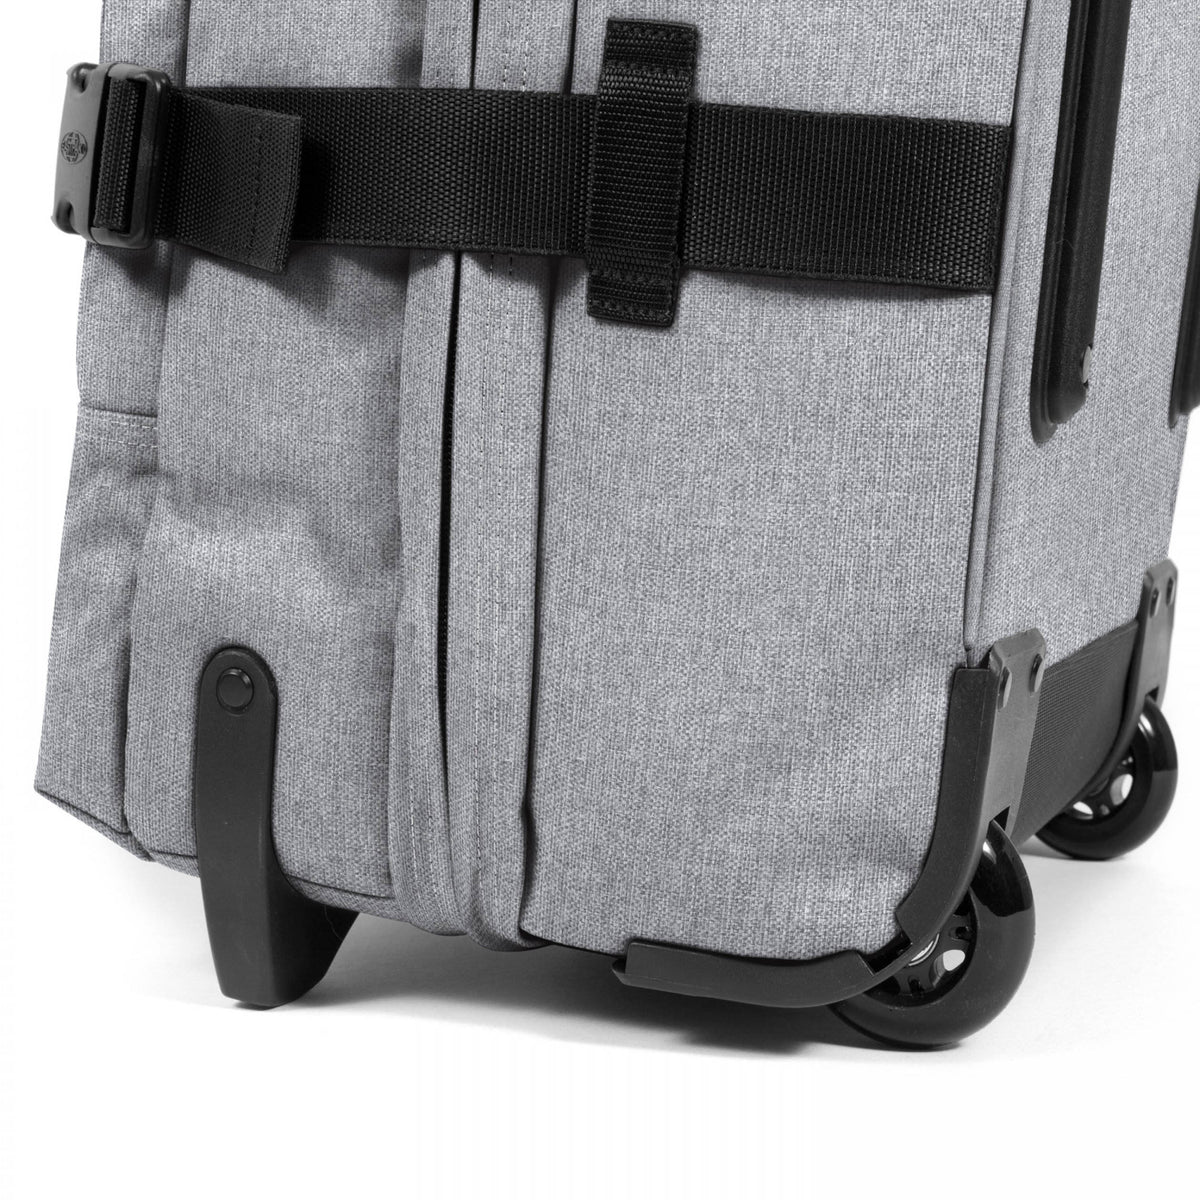 Eastpak Tranverz M Suitcase - Sunday Grey